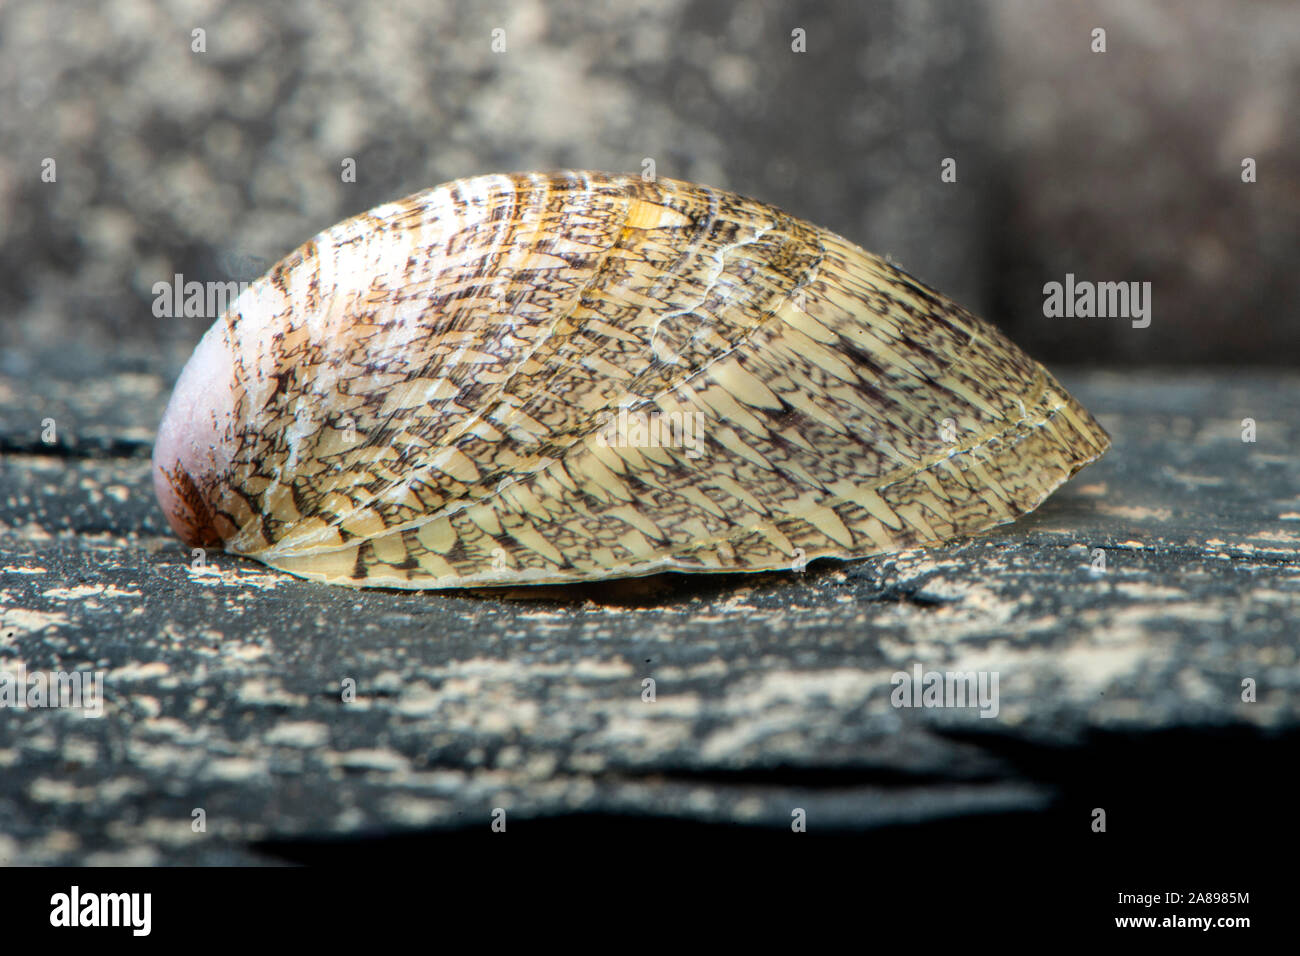 Septaria porcellana,Porzellan Napfschnecke,Freshwater Snail Stock Photo